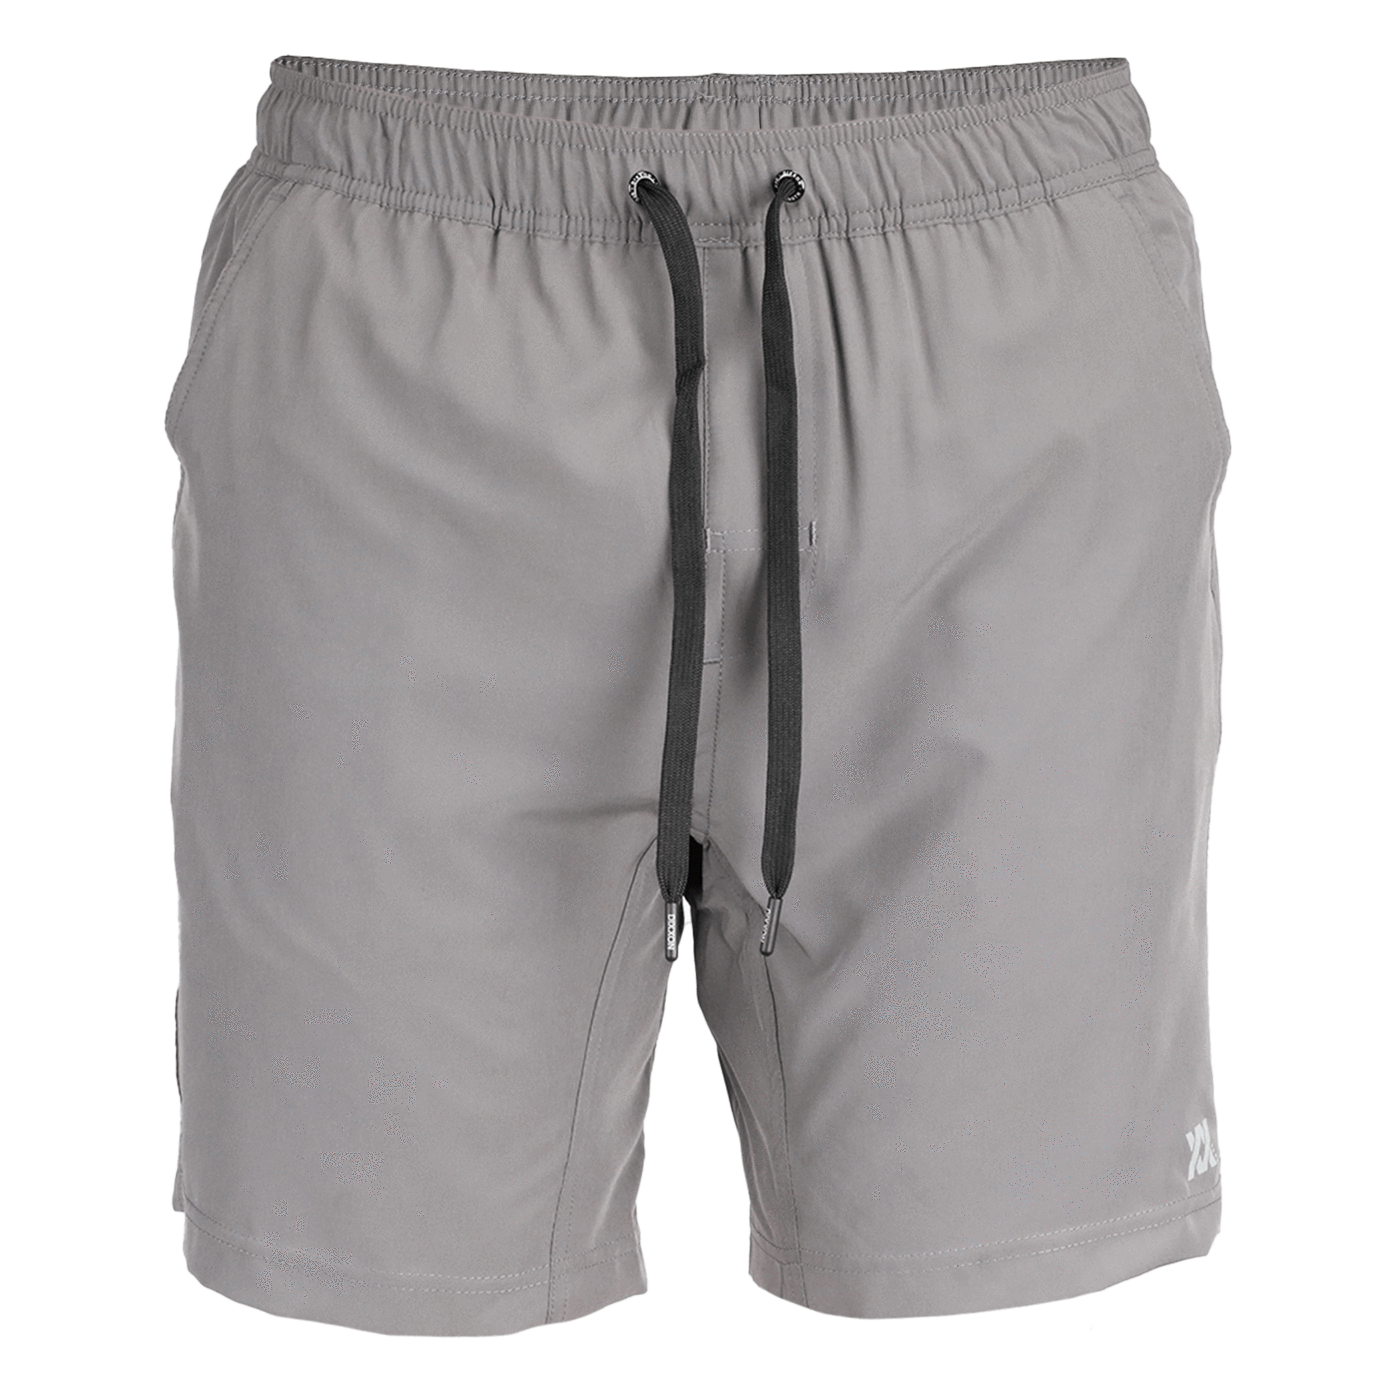 Short Pant Grey PNG HD Quality